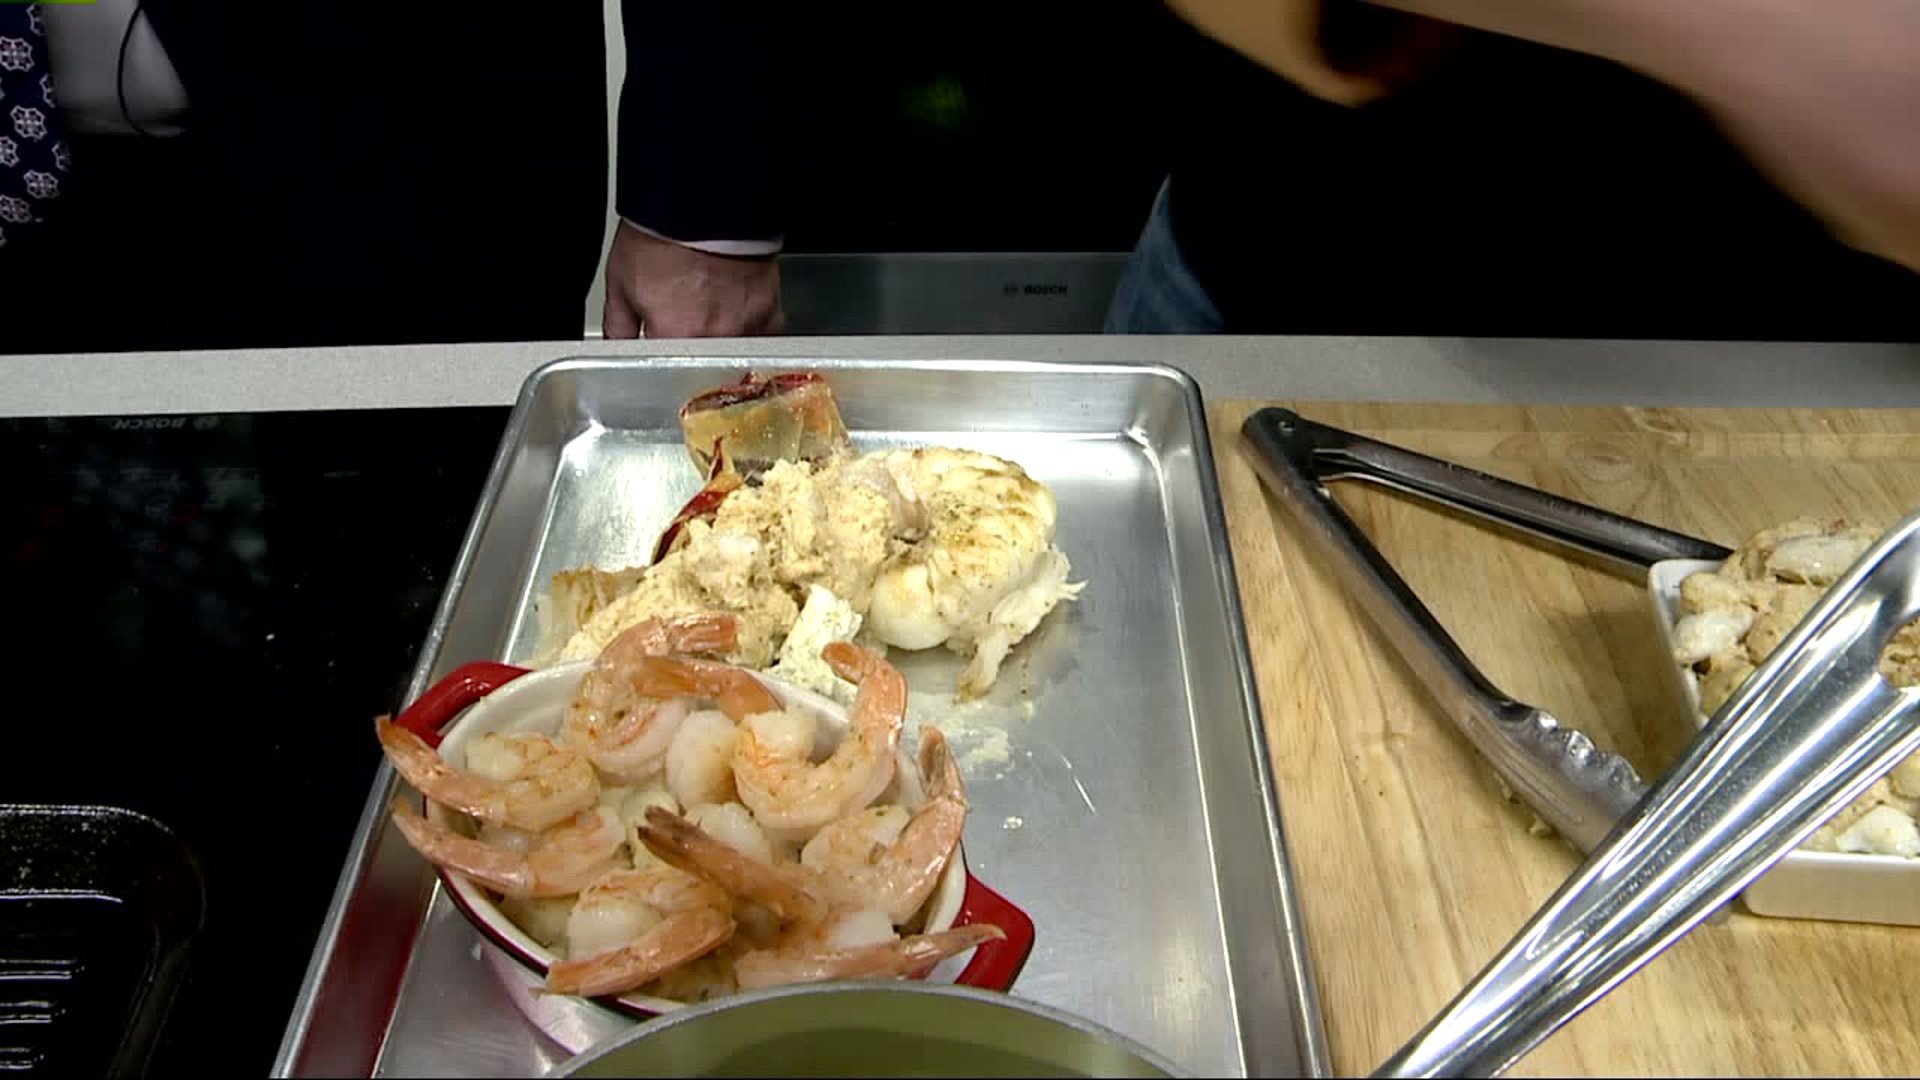 Stuffed Lobster Tail snd shrimp scampi over mashed potatoes and Lavender lemonade sangria